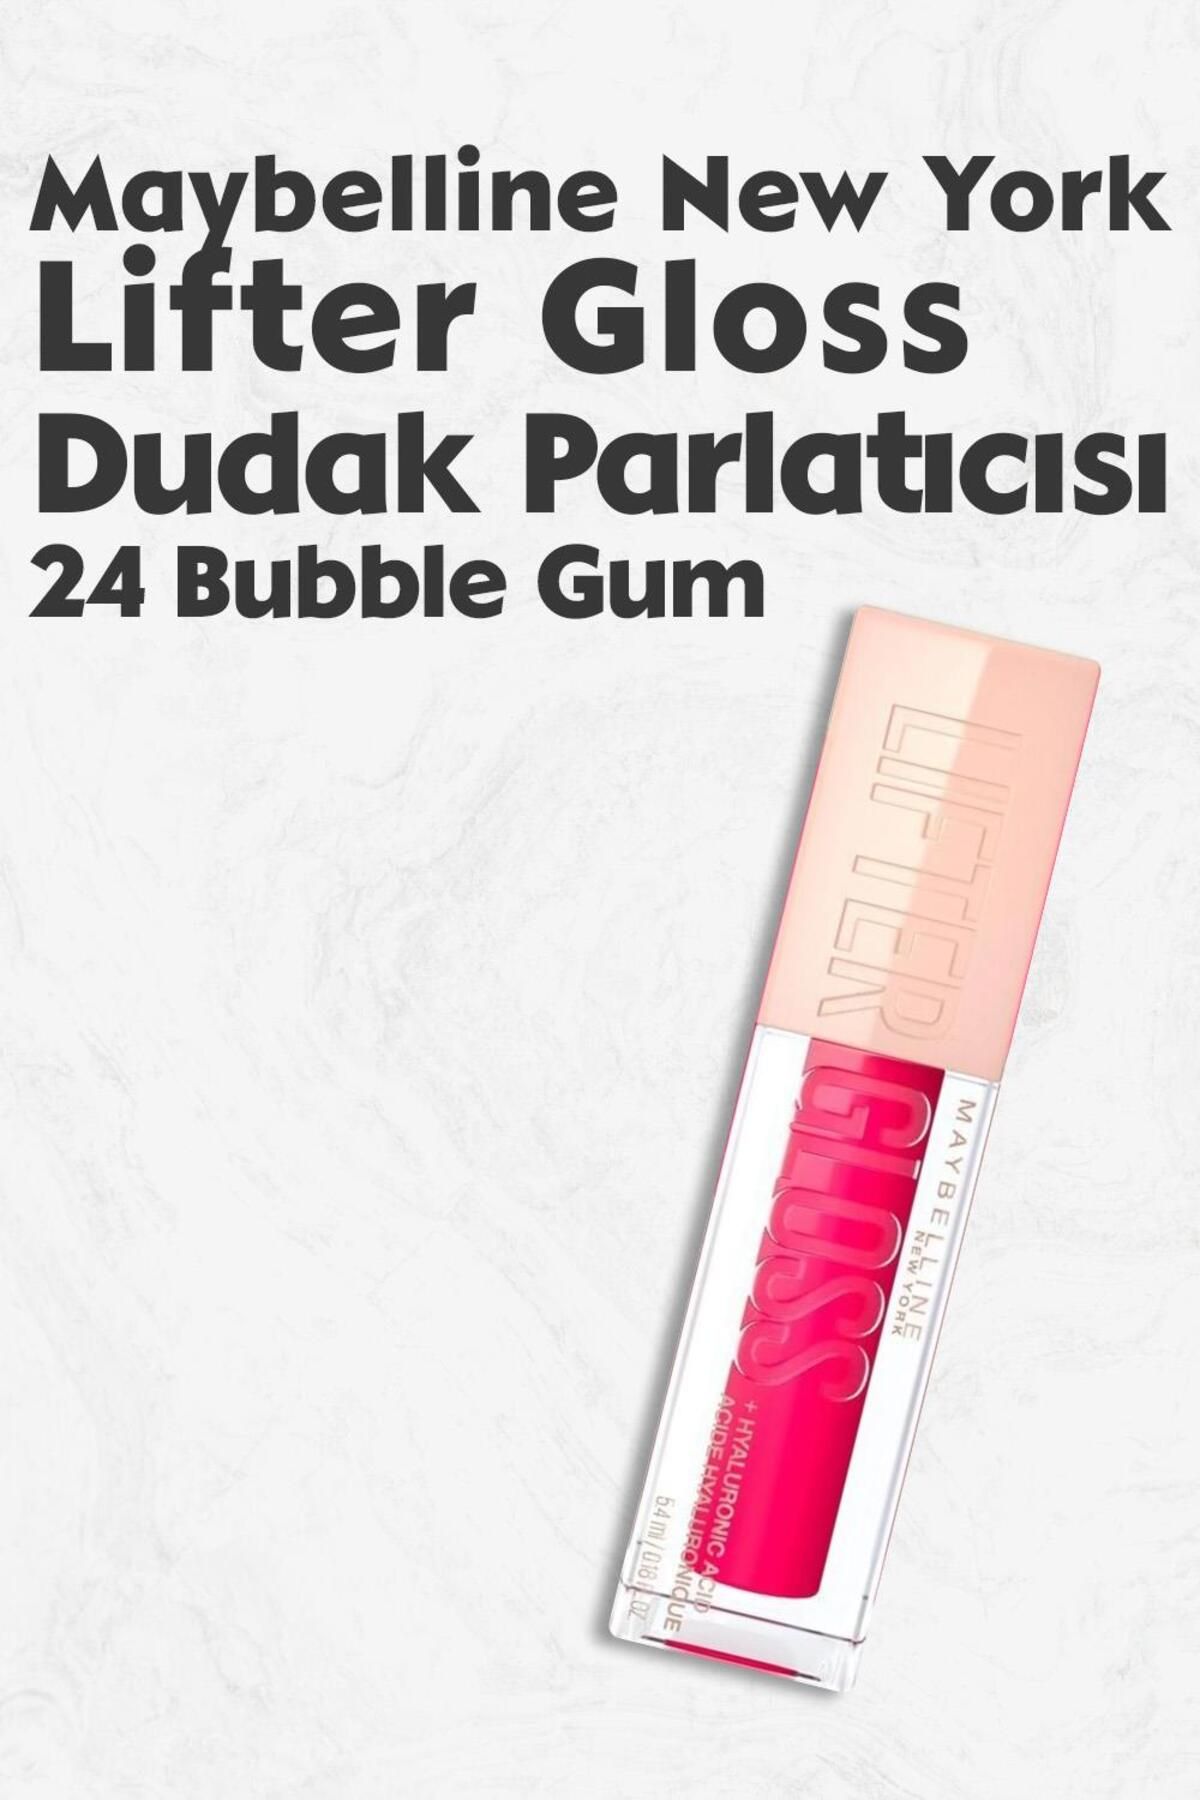 Maybelline New York Lifter Gloss Dudak Parlatıcısı 24 Bubble Gum